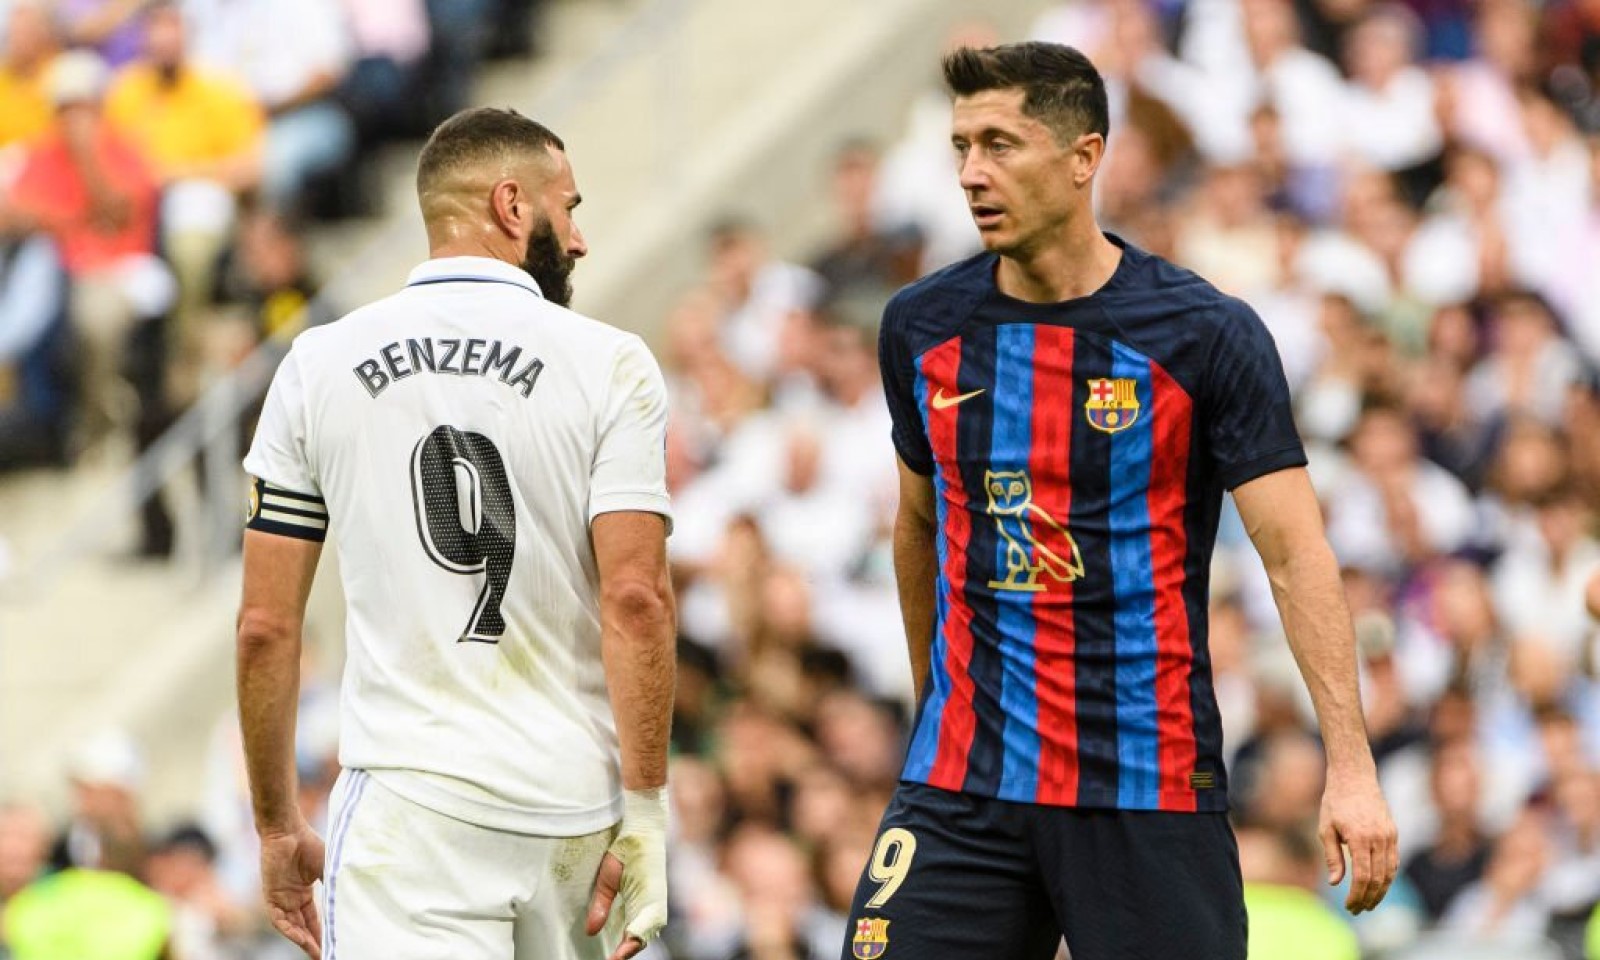 Karim Benzema vs Robert Lewandowski, los dos grandes artilleros estarán cara a cara en la final de la Supercopa de España